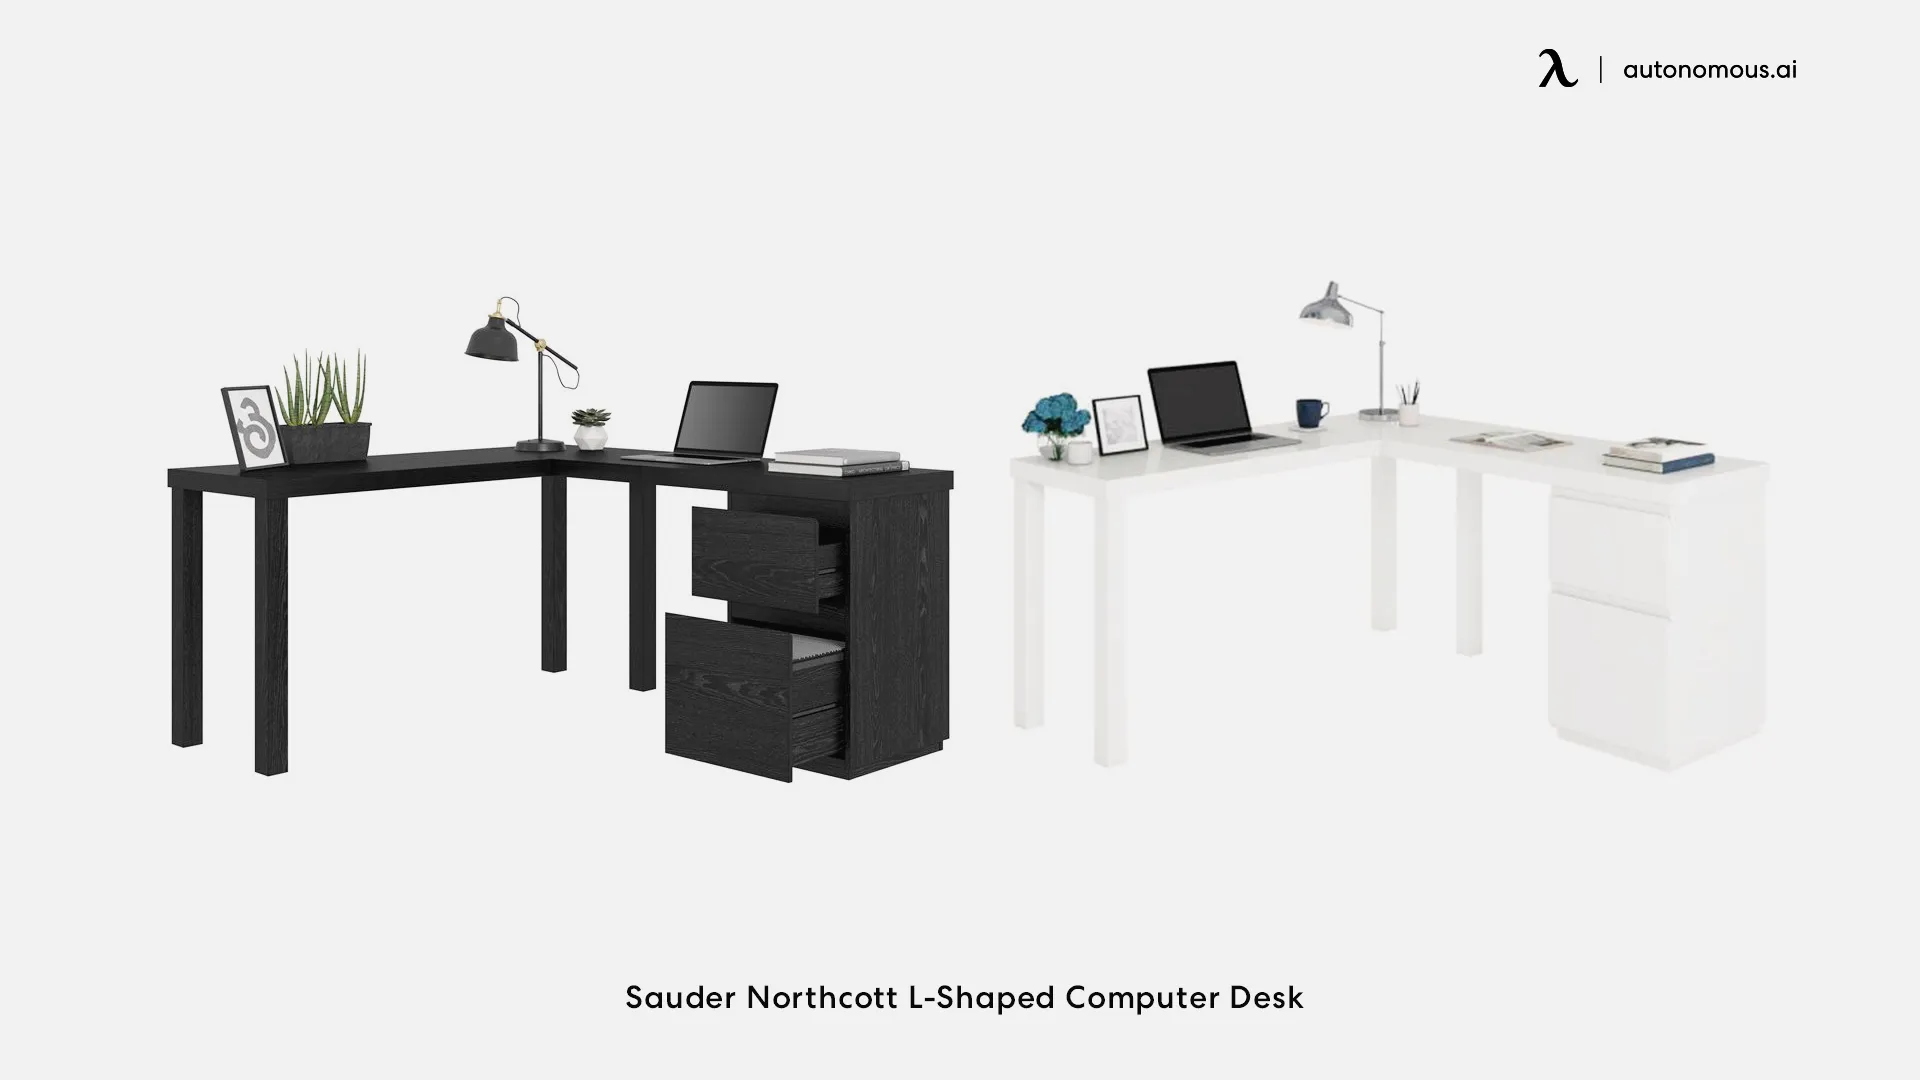 The L-Shaped Computer Desk by Sauder Northcott